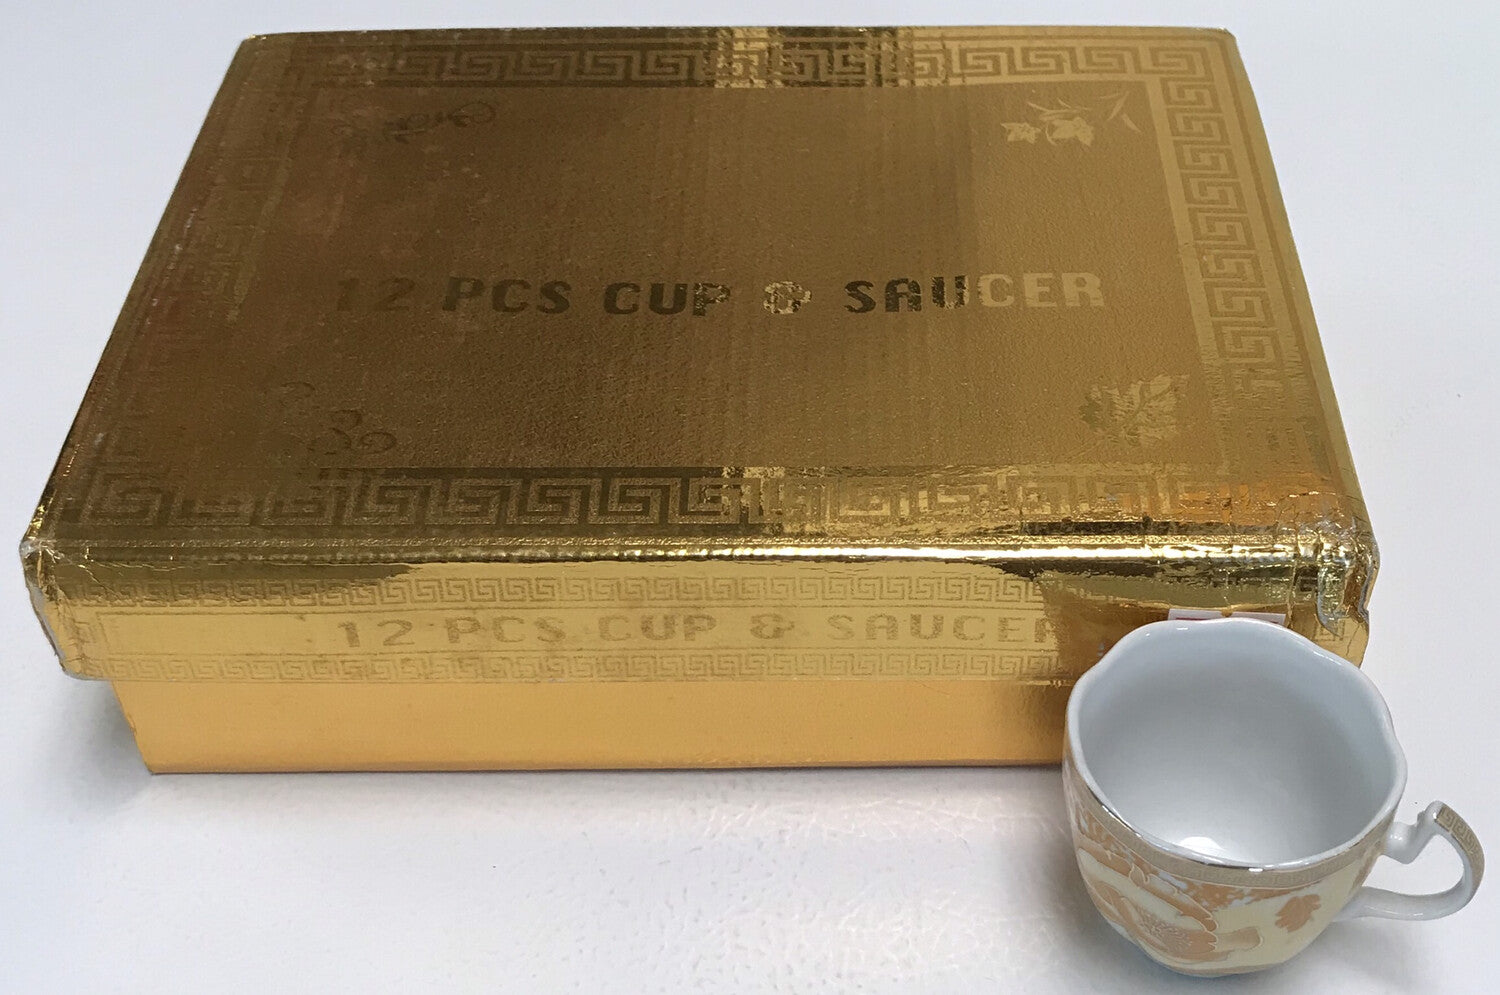 12 pcs cups & saucers gold box